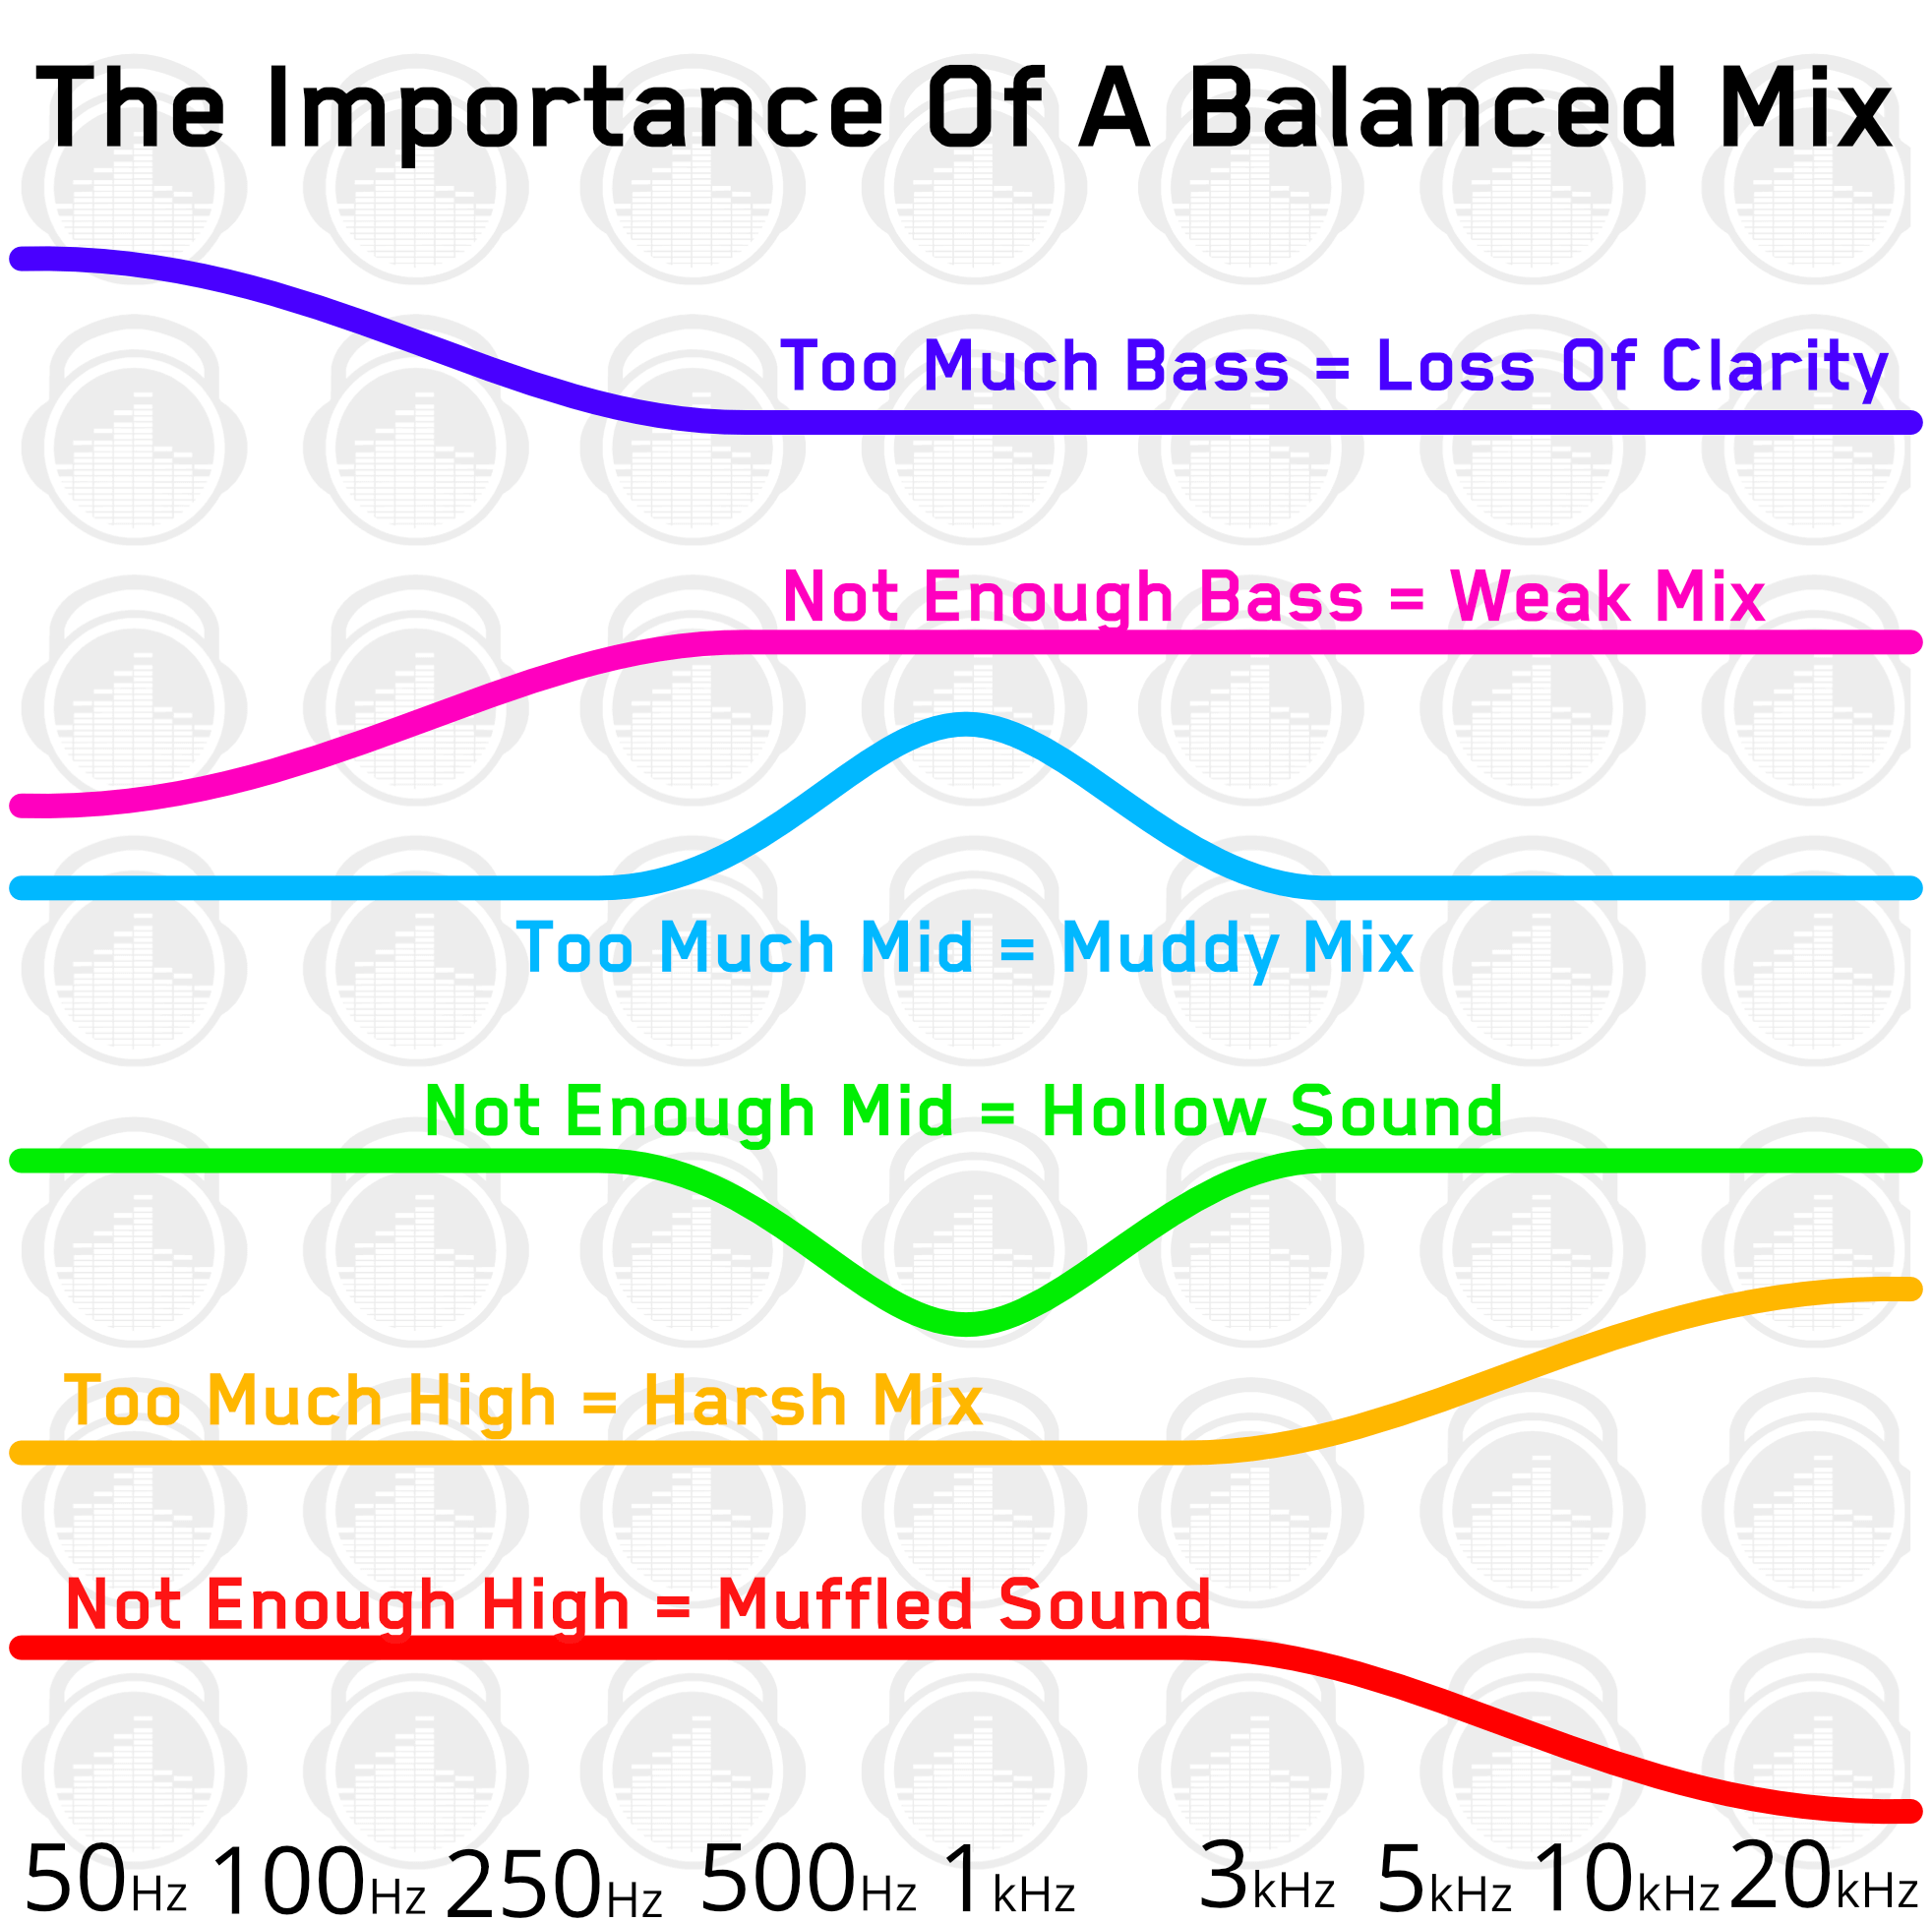 Importance of a balanced mix